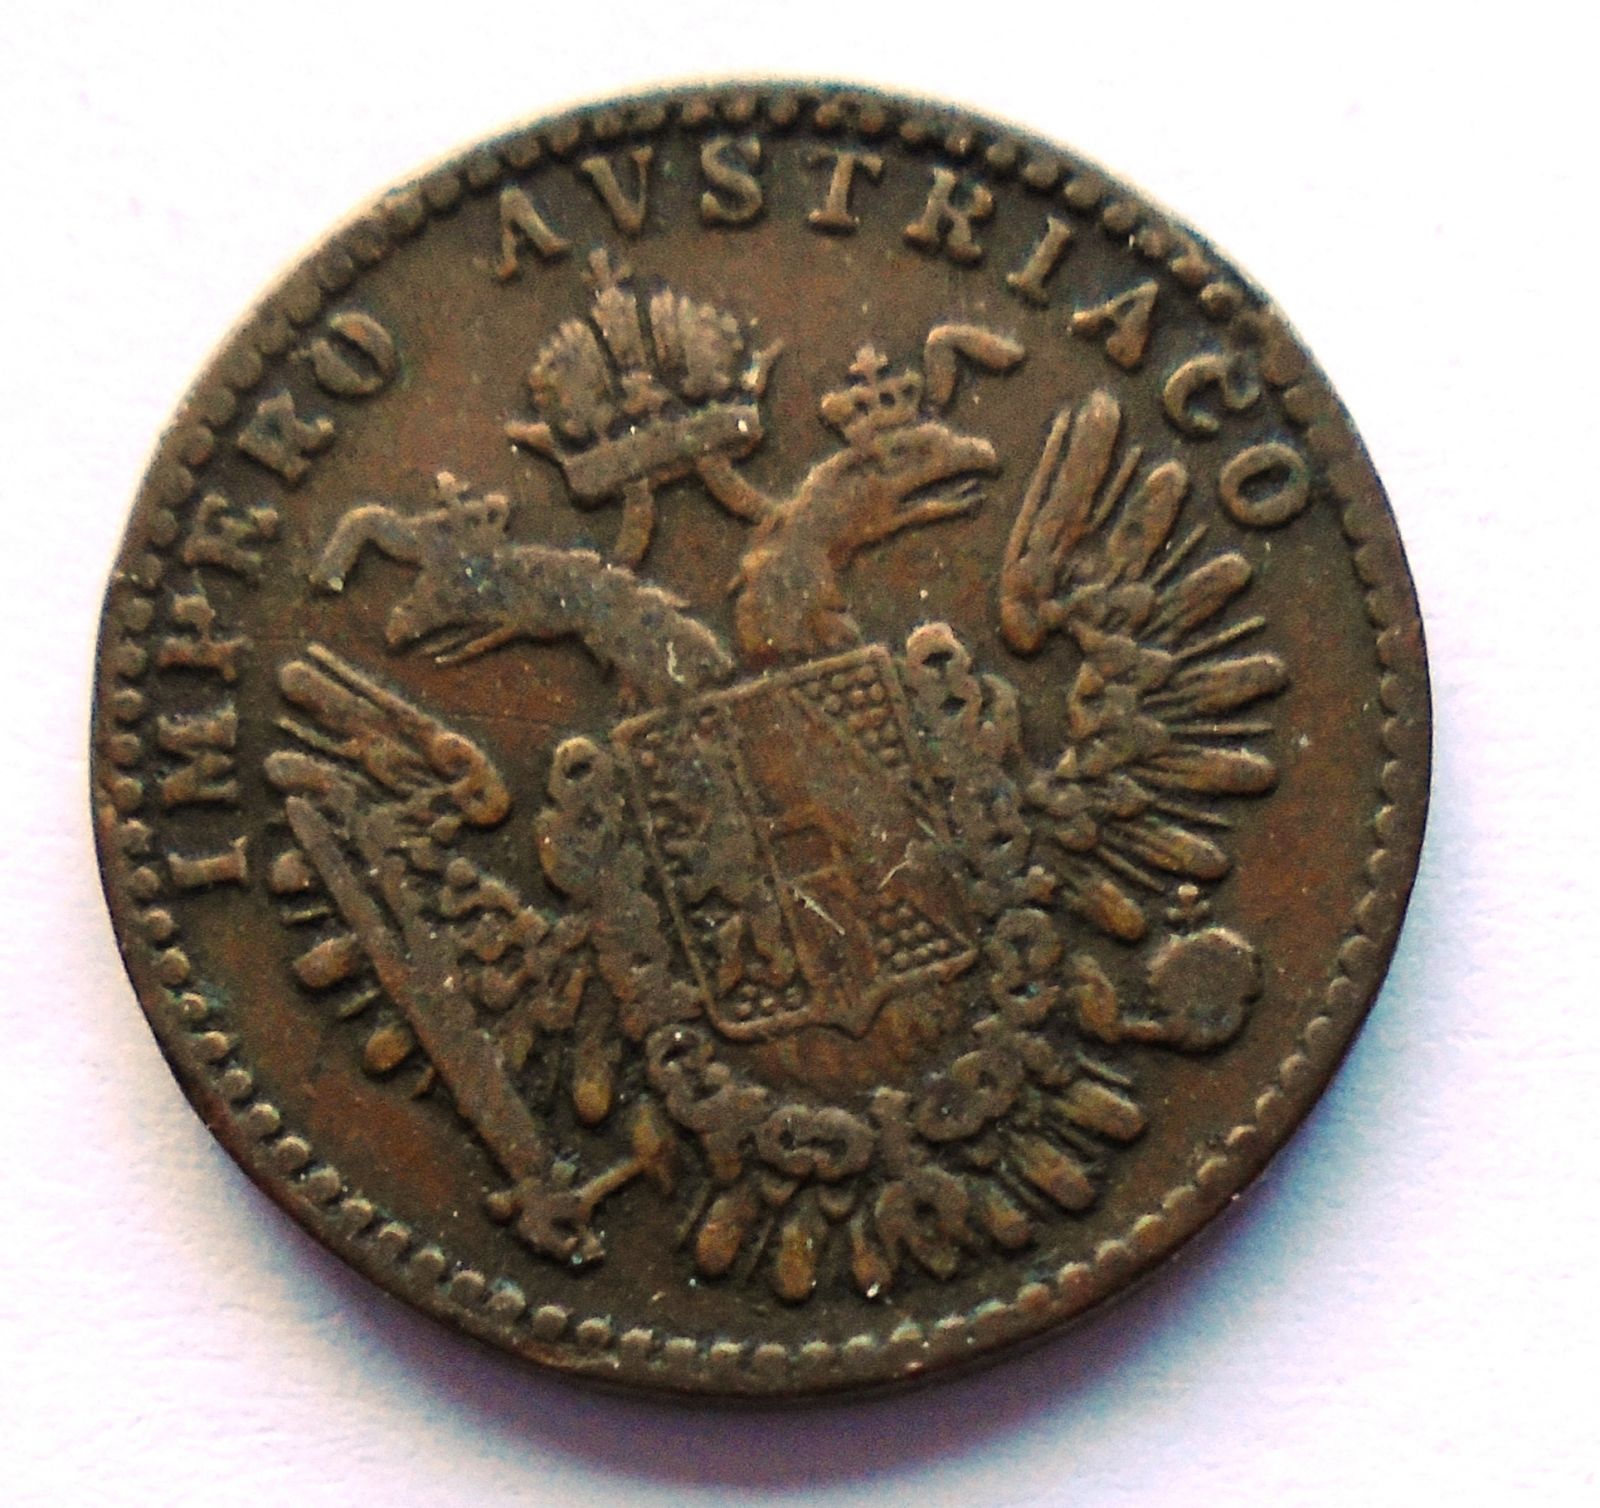 Rakousko 3 Centesimi 1852 M